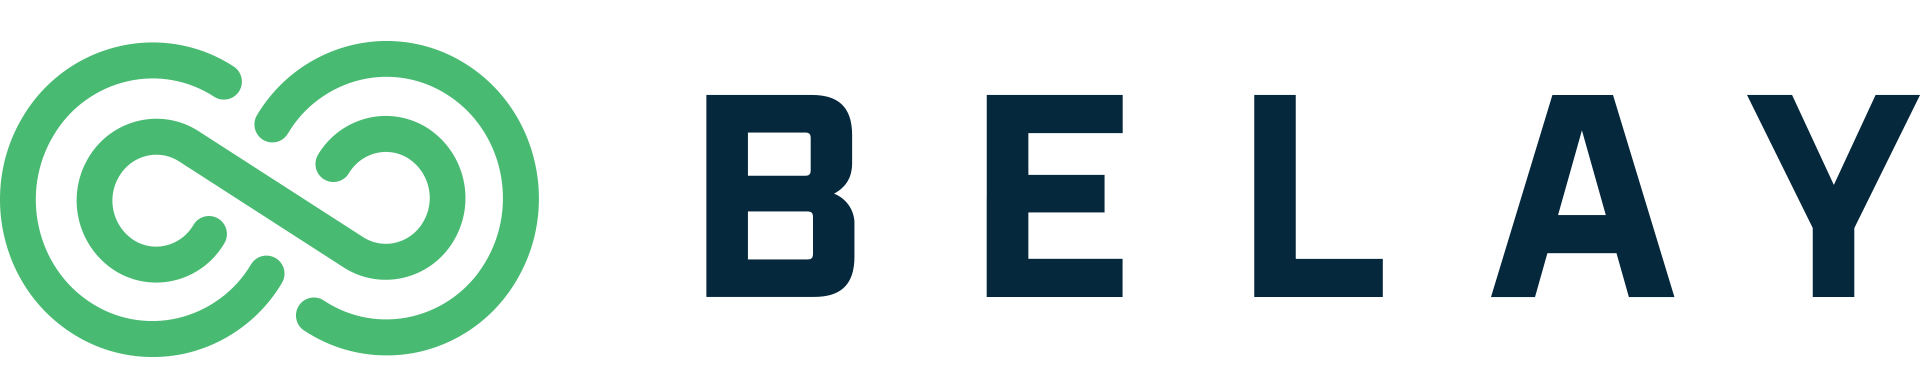 Belay Solutions logo